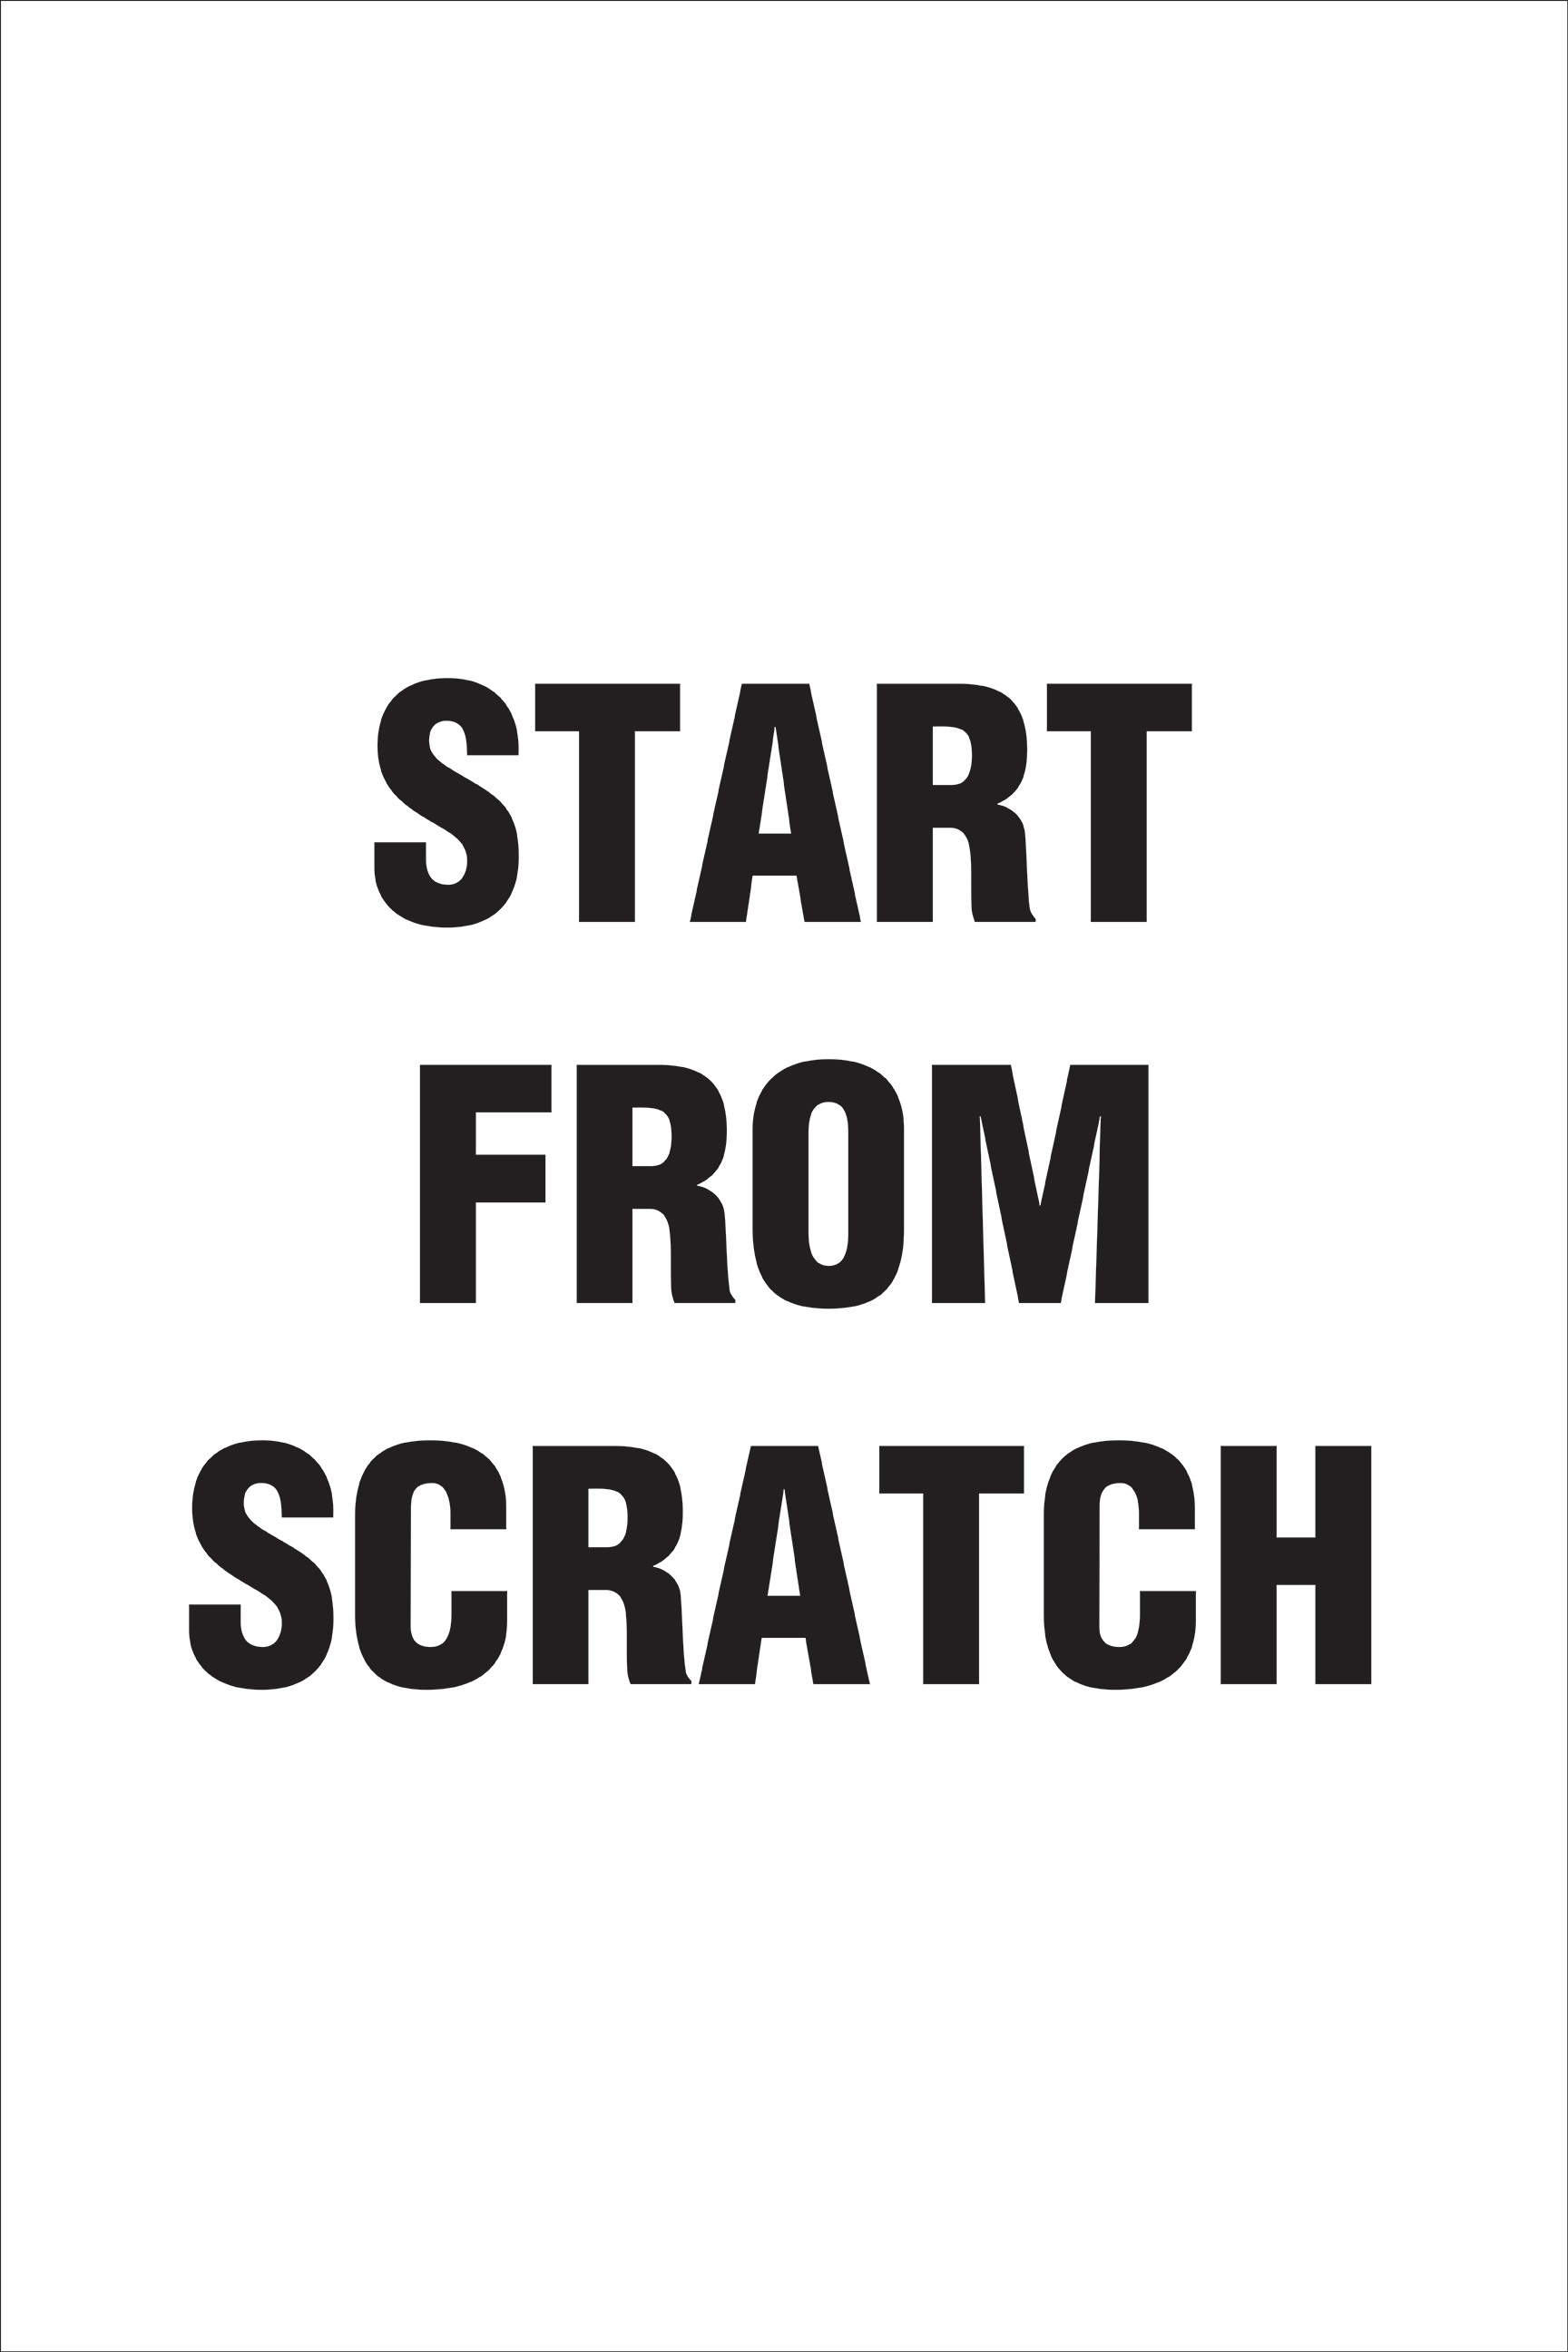 A Frame Template - Design From Scratch